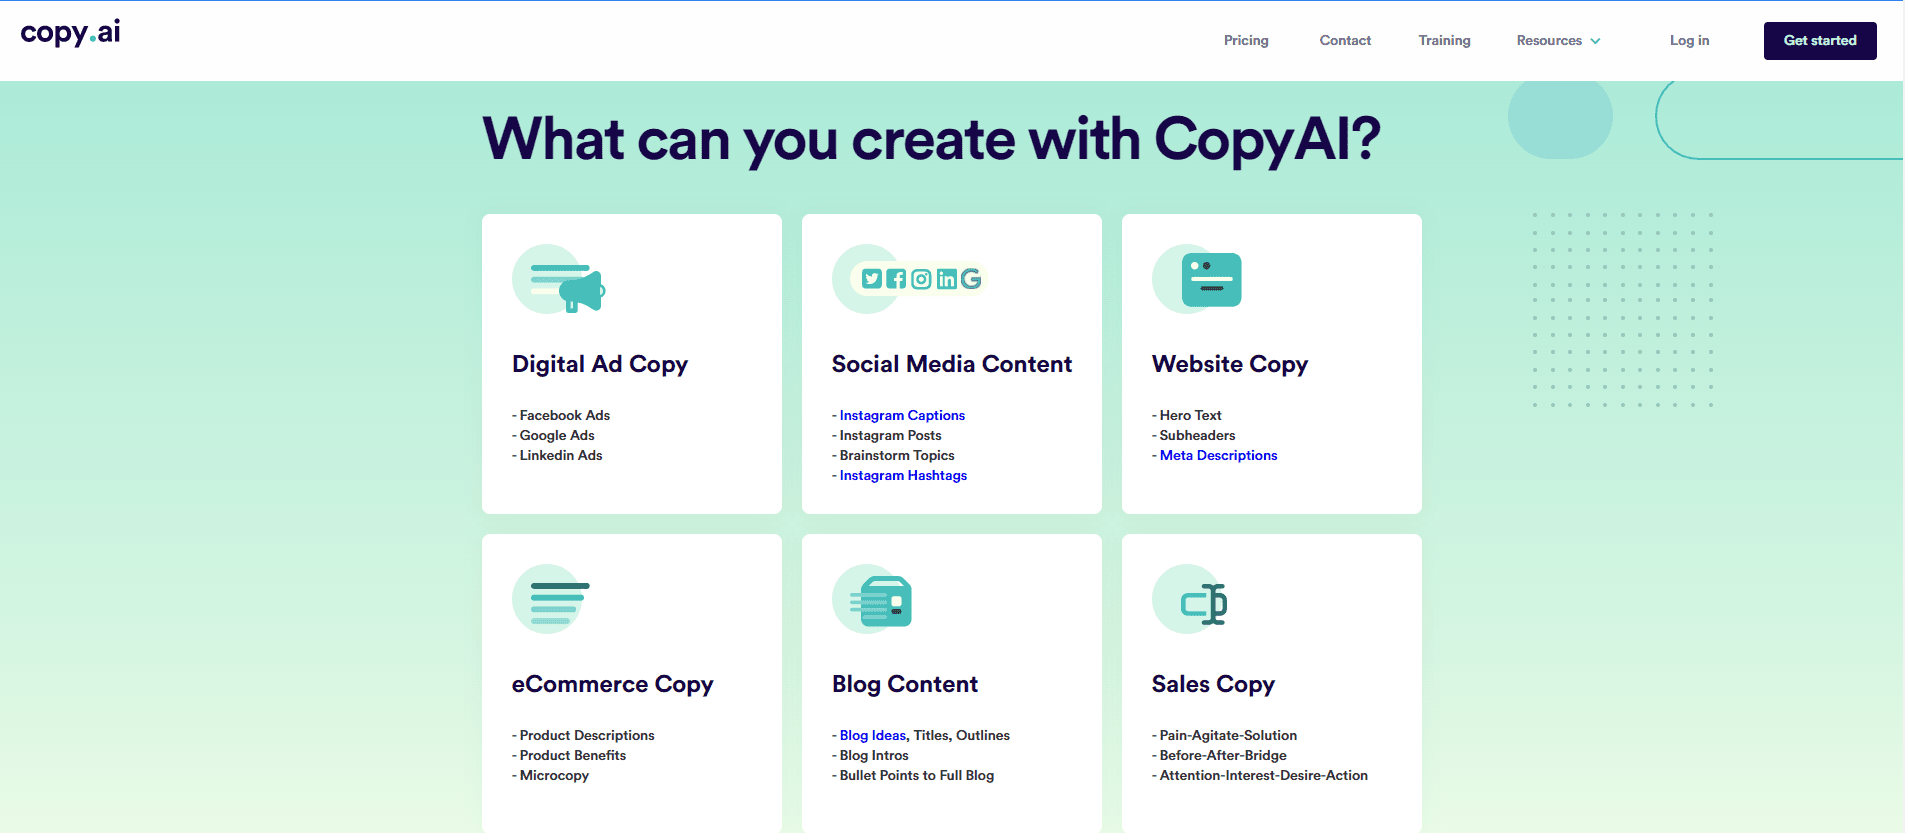 Features Of Copy.ai - Copy.ai Review